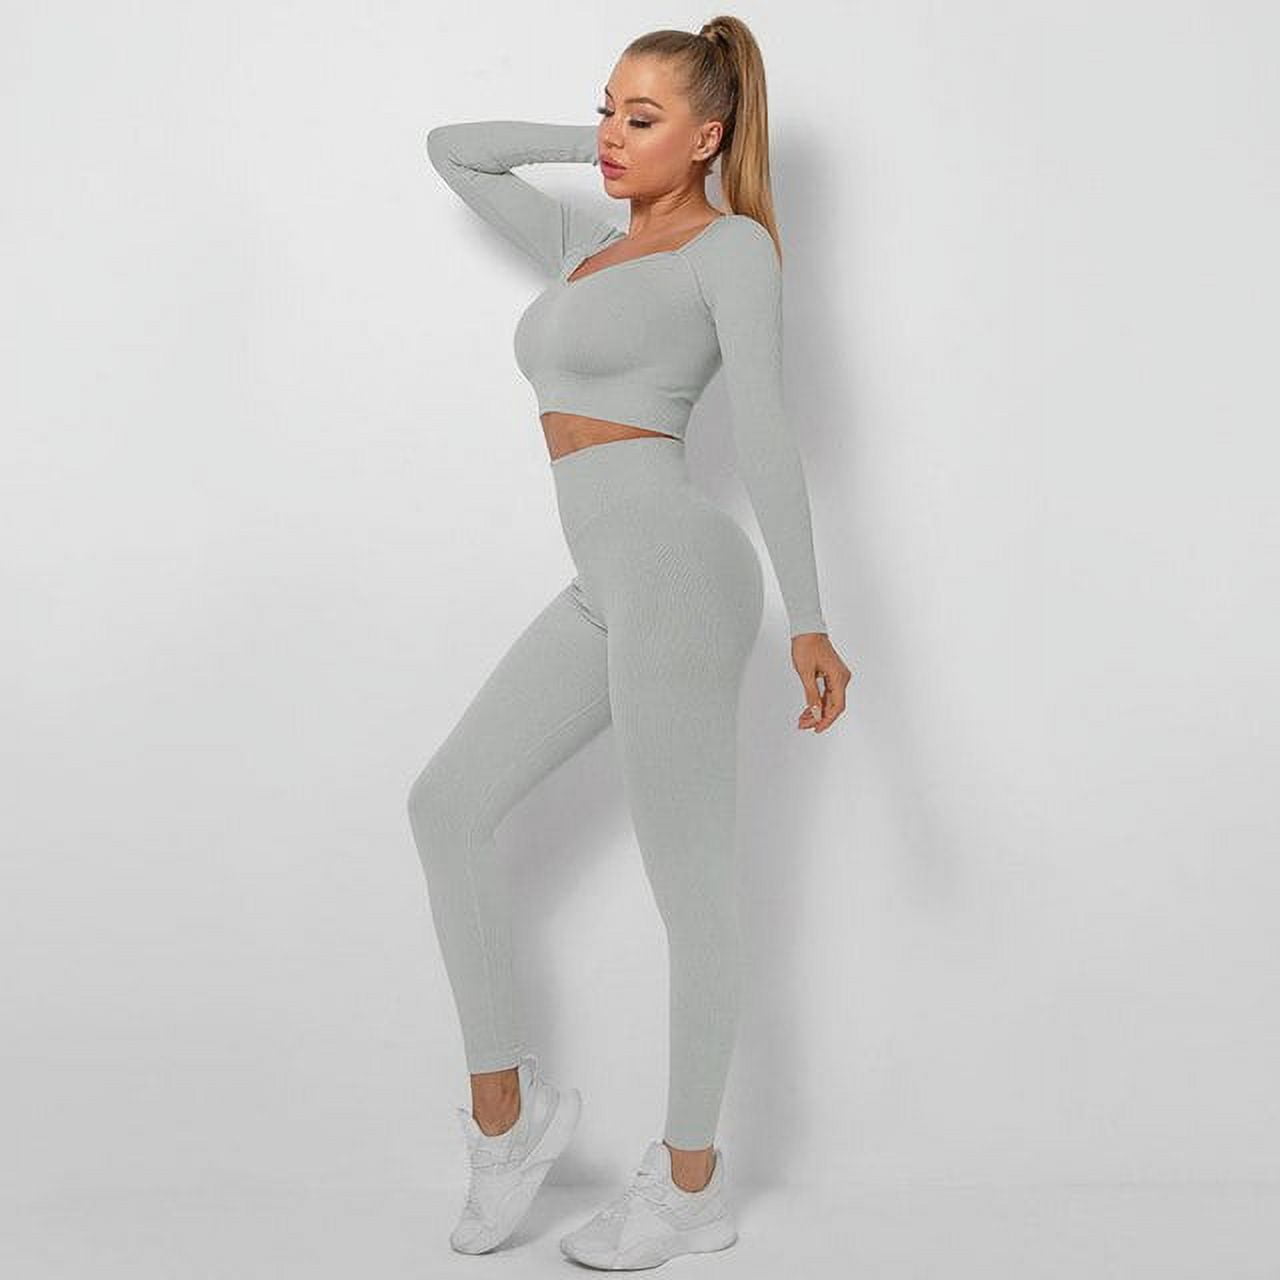 Yoga Set Seamless Women Gym Sport Suit Gym Set Workout Clothes For